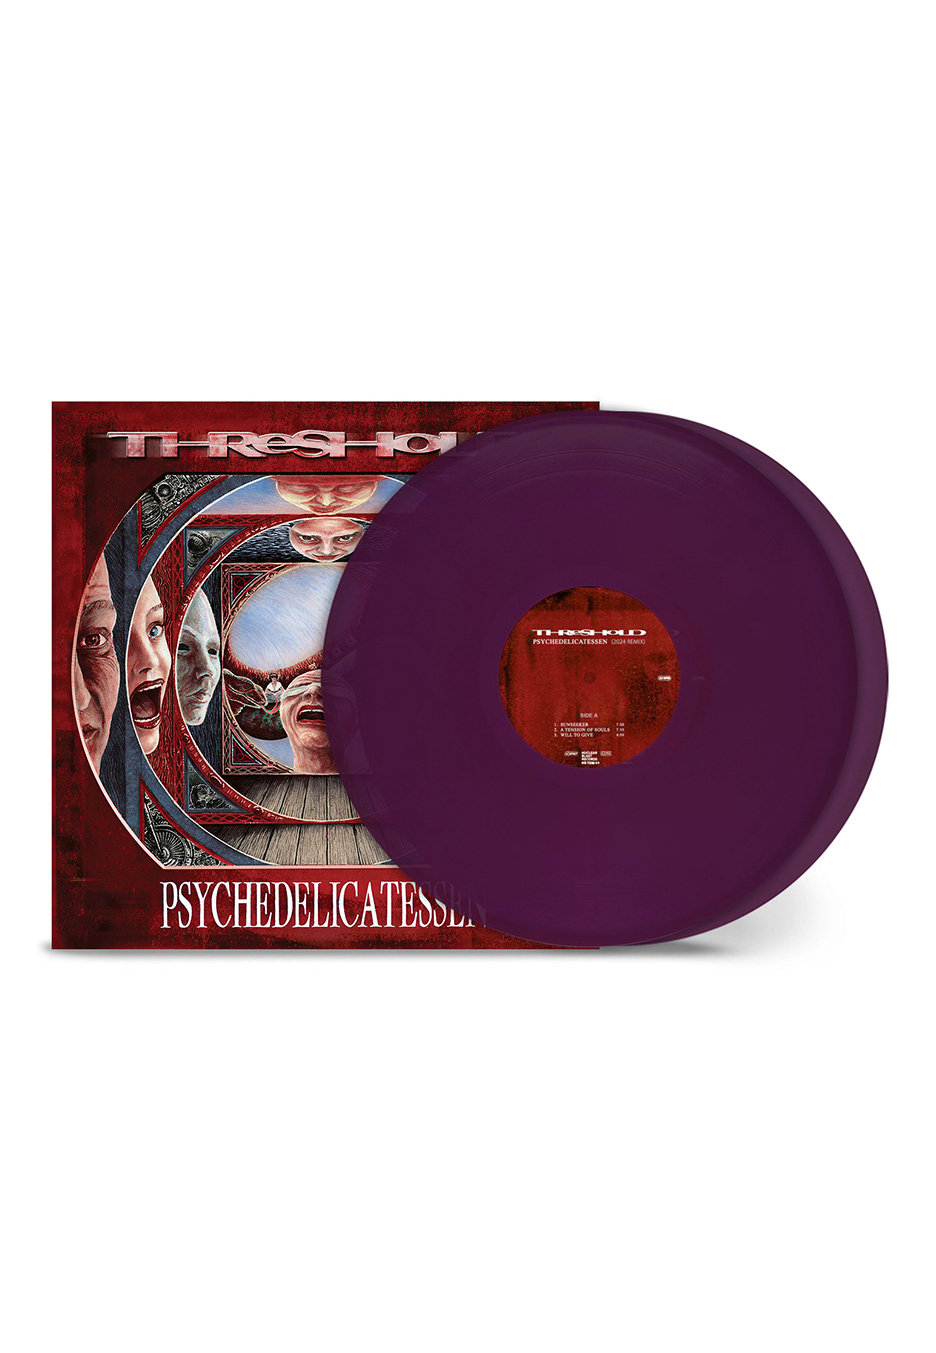 Threshold - Psychedelicatessen (Remixed & Remastered) Ltd. Transparent Violet - Colored 2 Vinyl